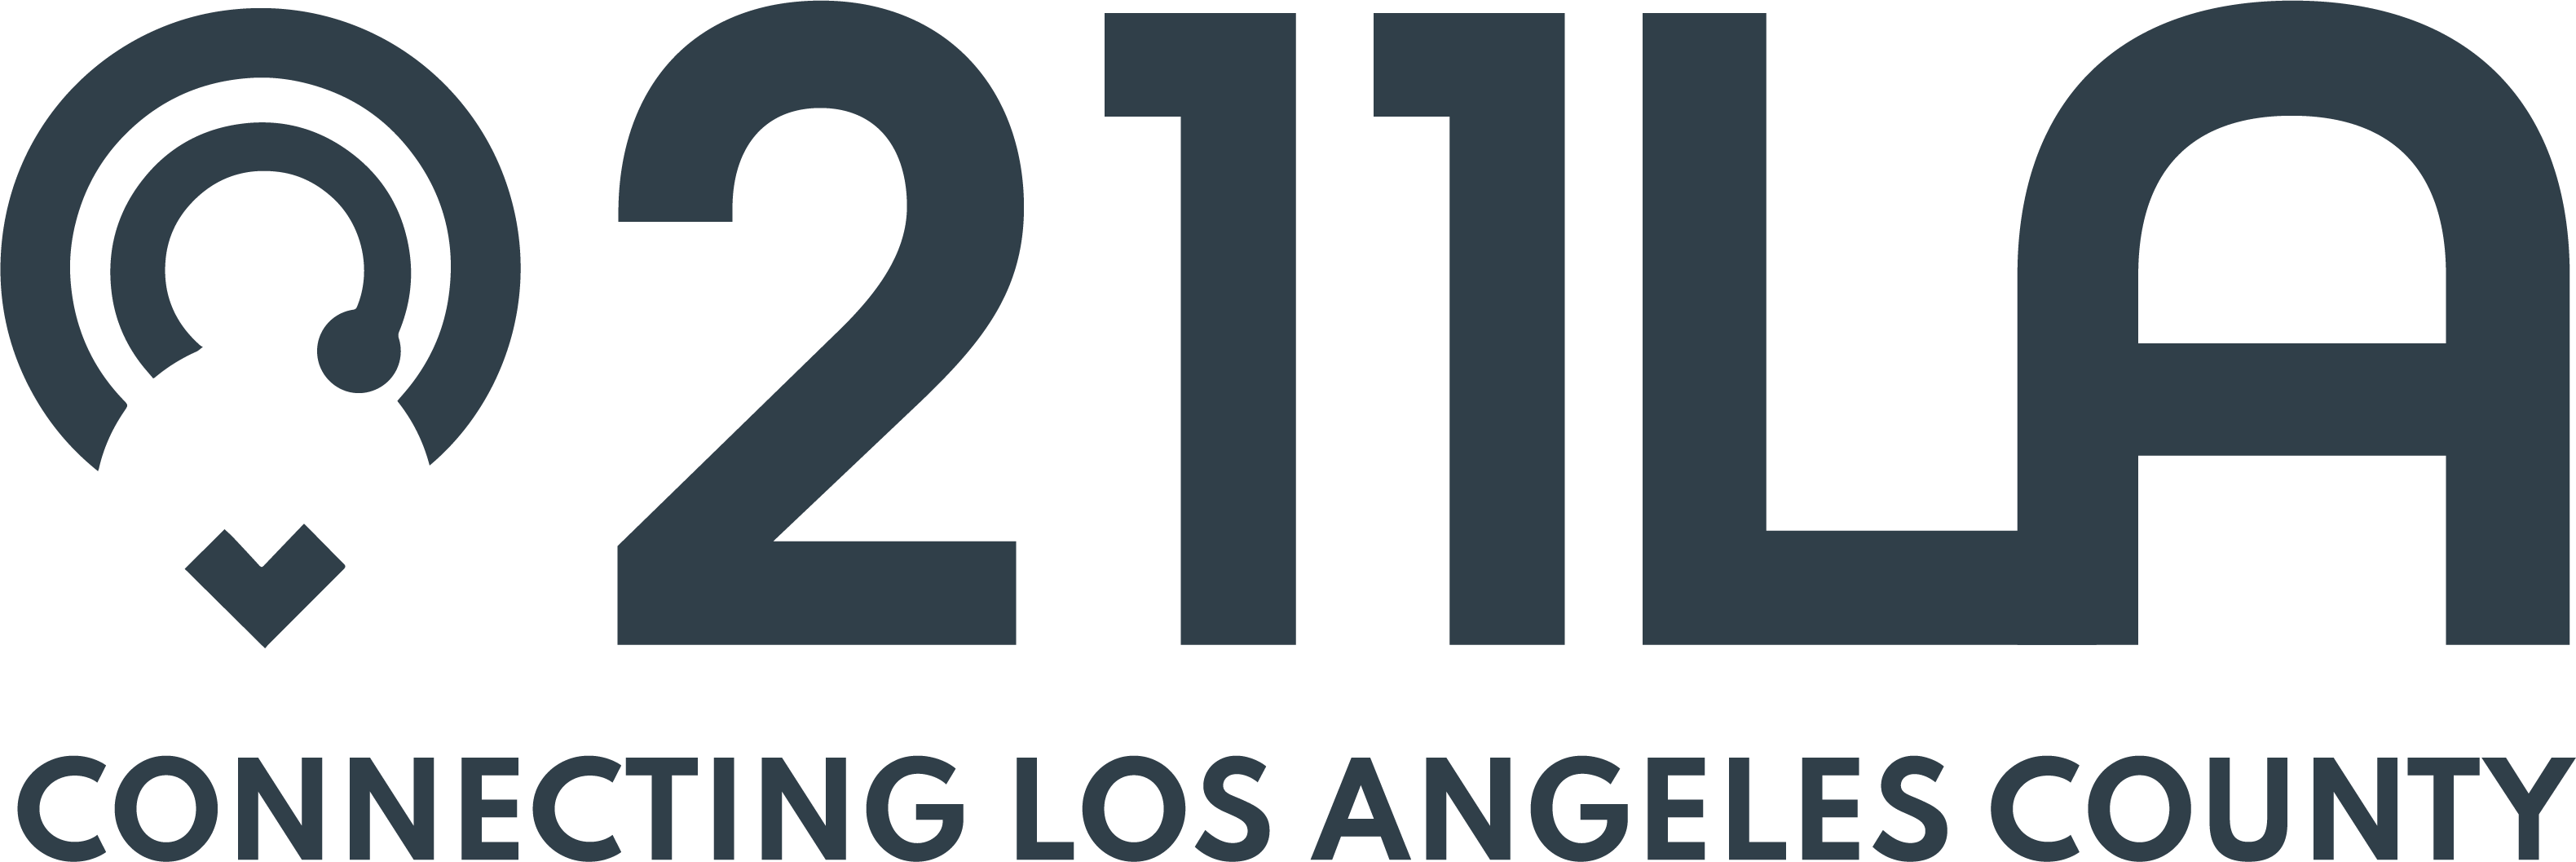 211 LA Logo